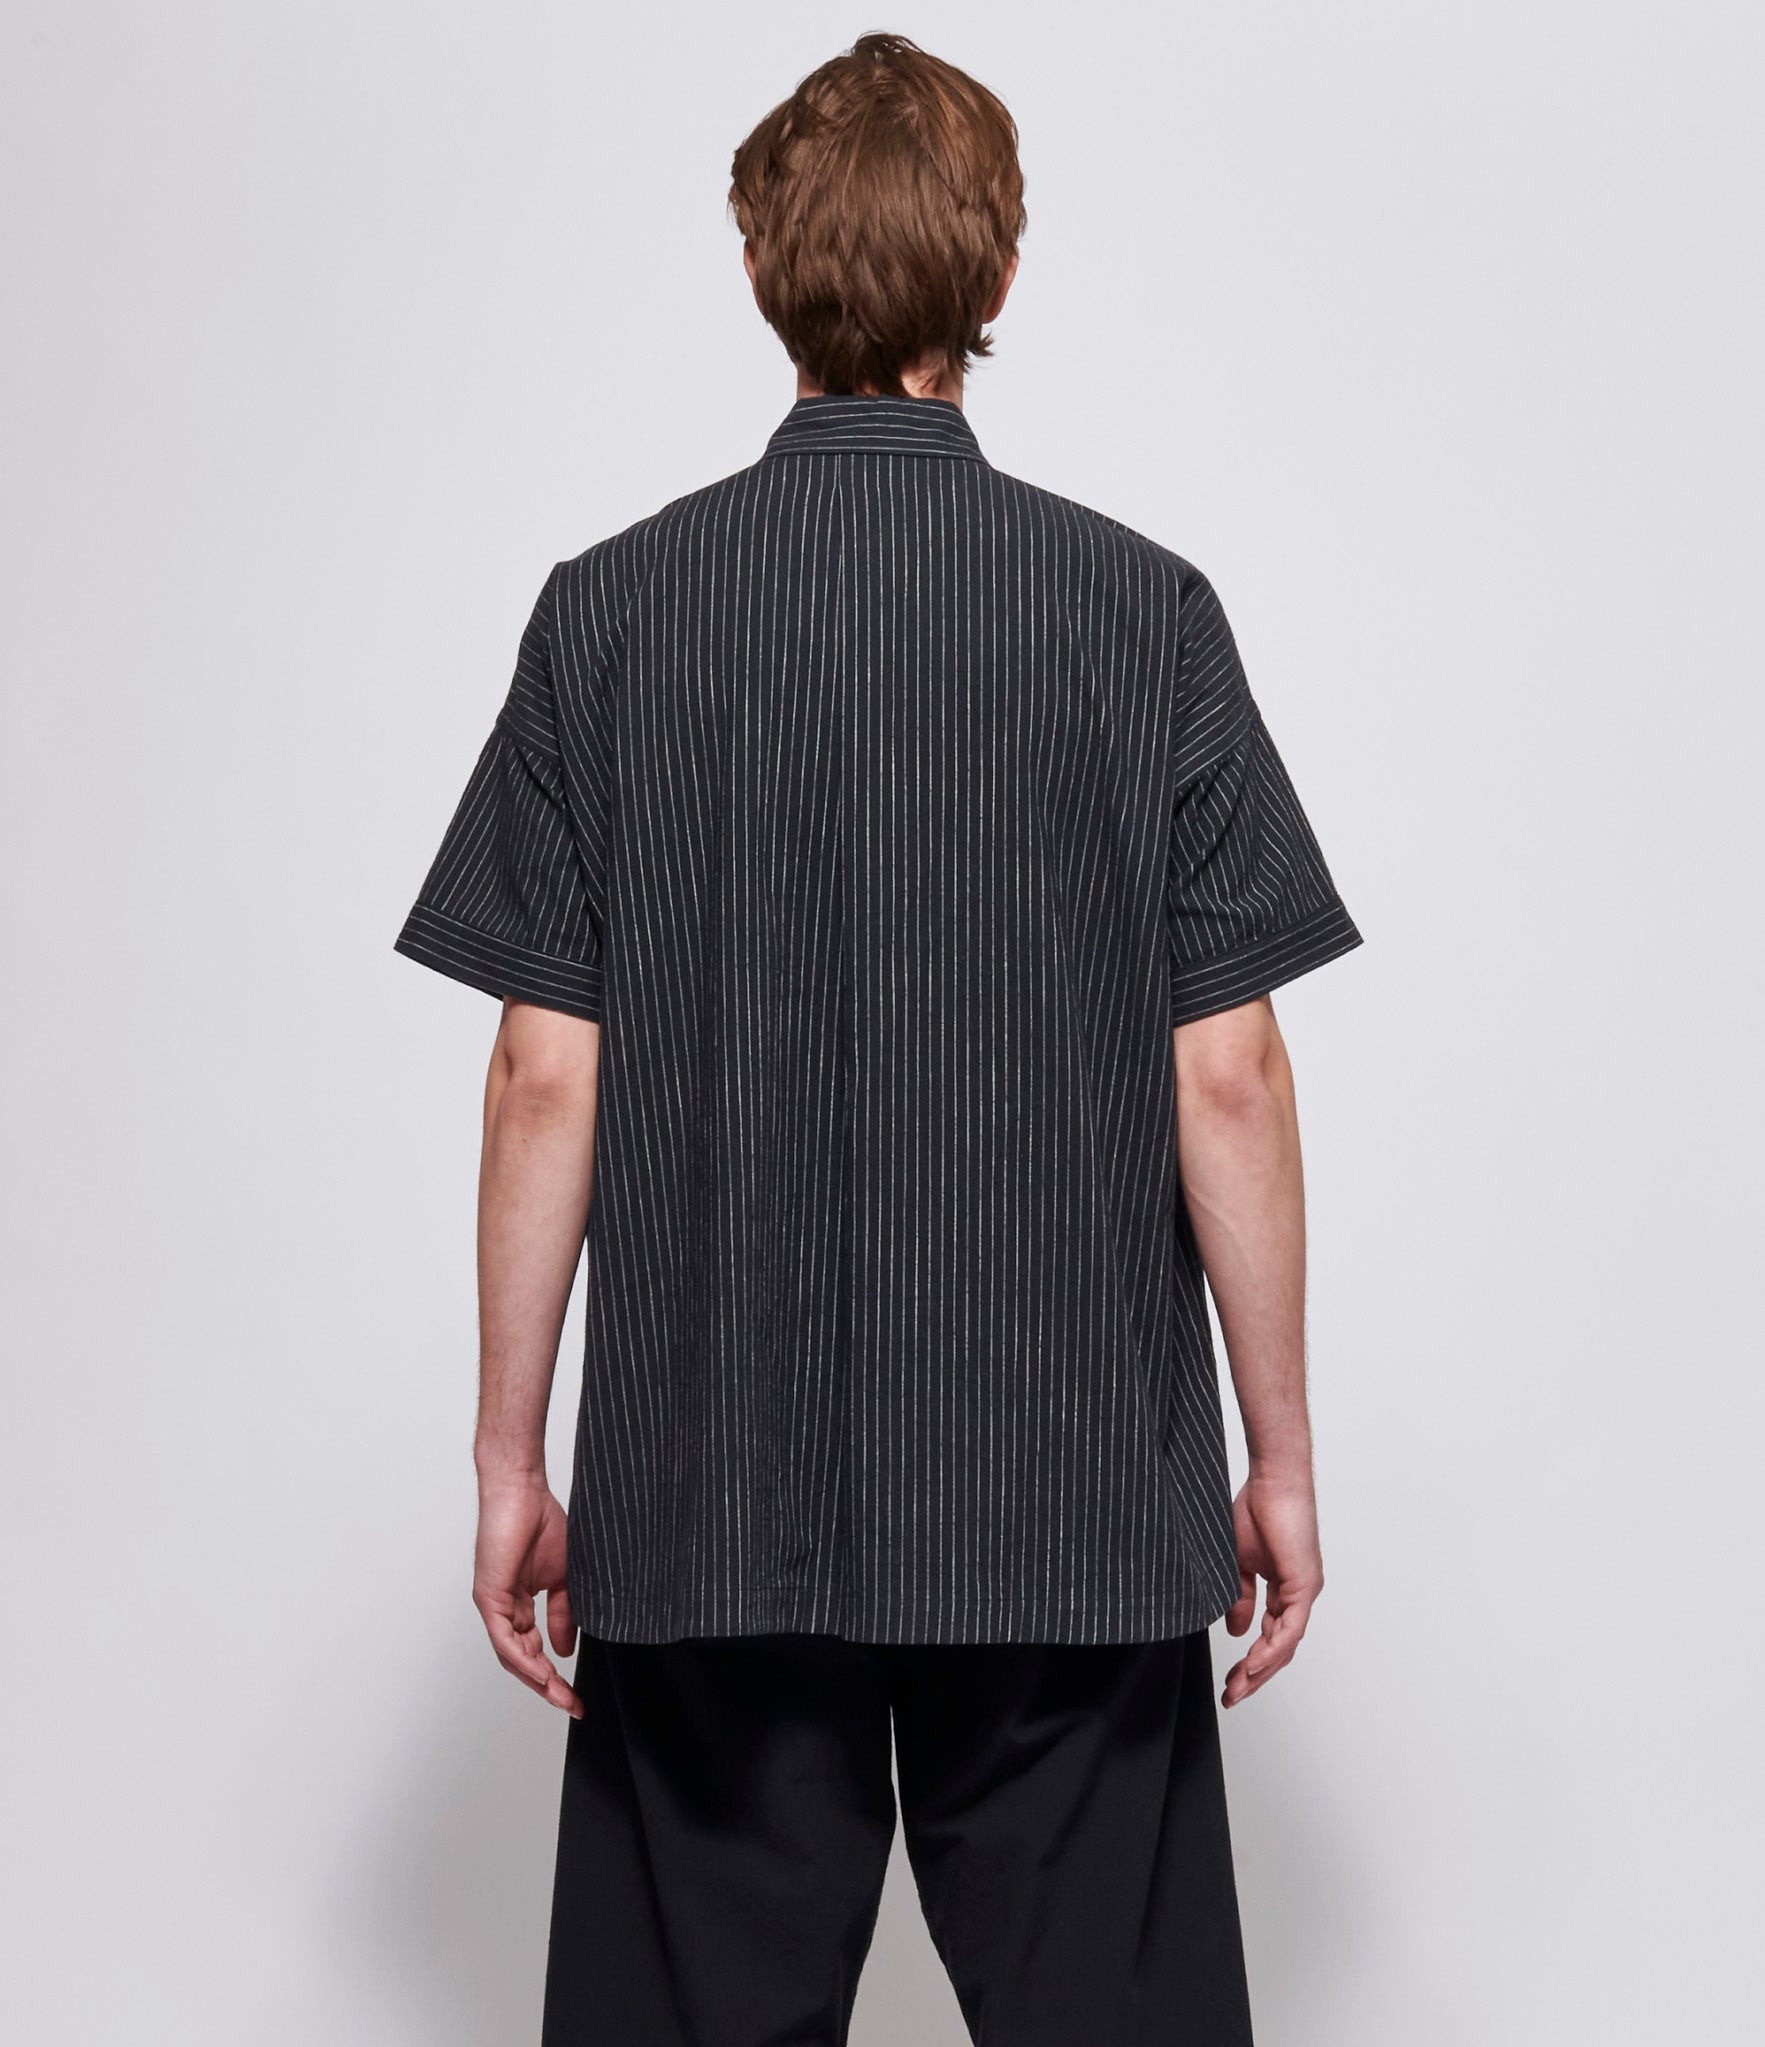 Jan Jan Van Essche #98 Shirt Black Striped